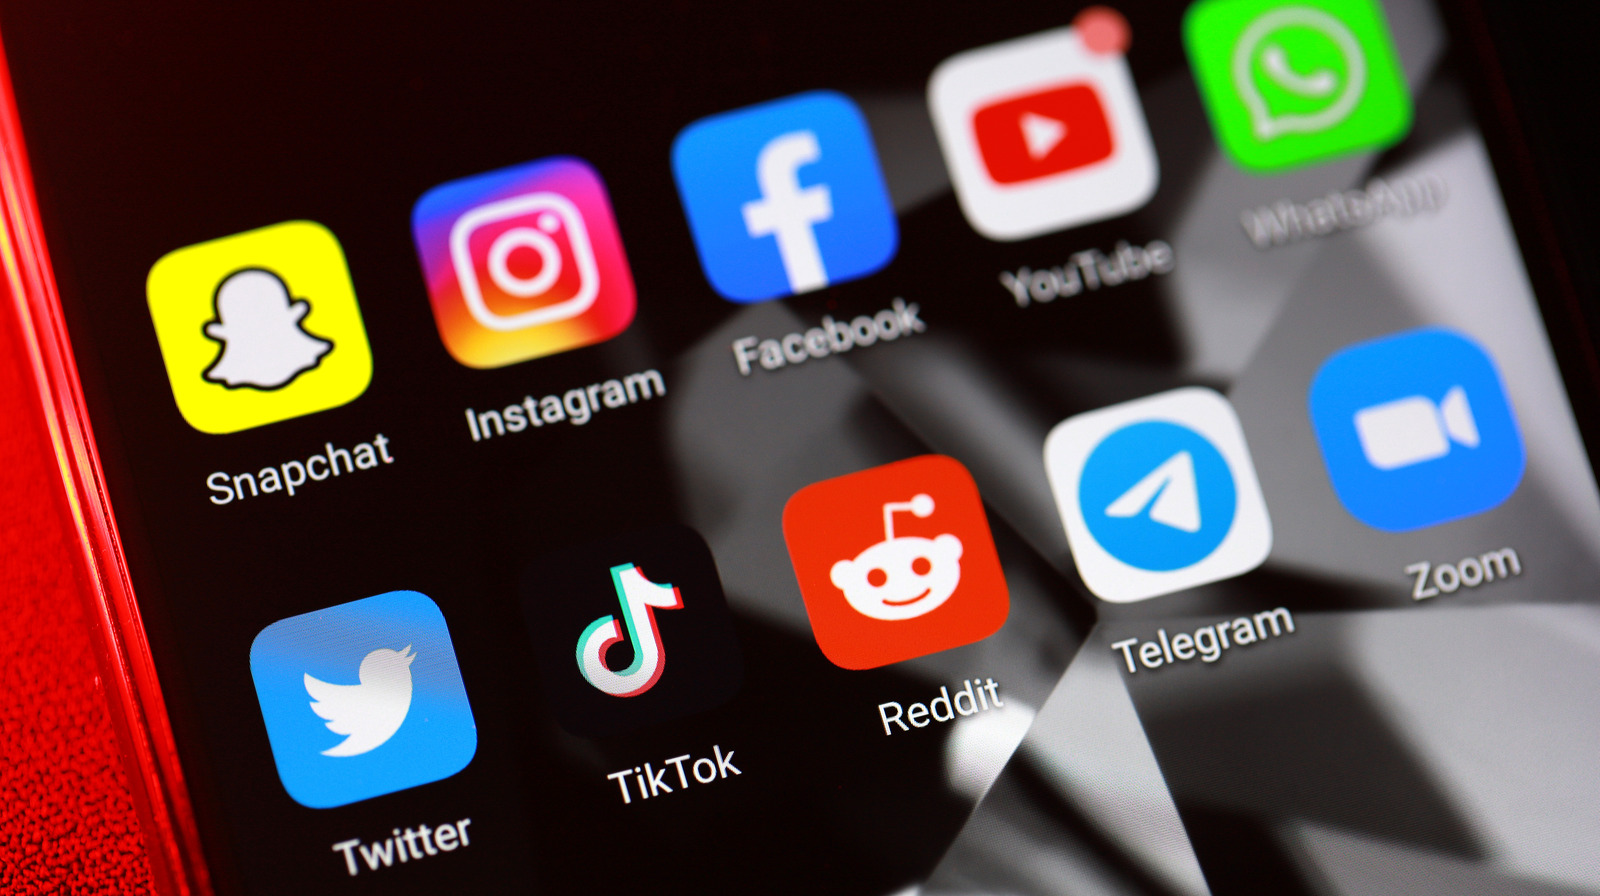 Facebook Vs. Twitter: Which Is The Worst Social Media App? – SlashGear Survey